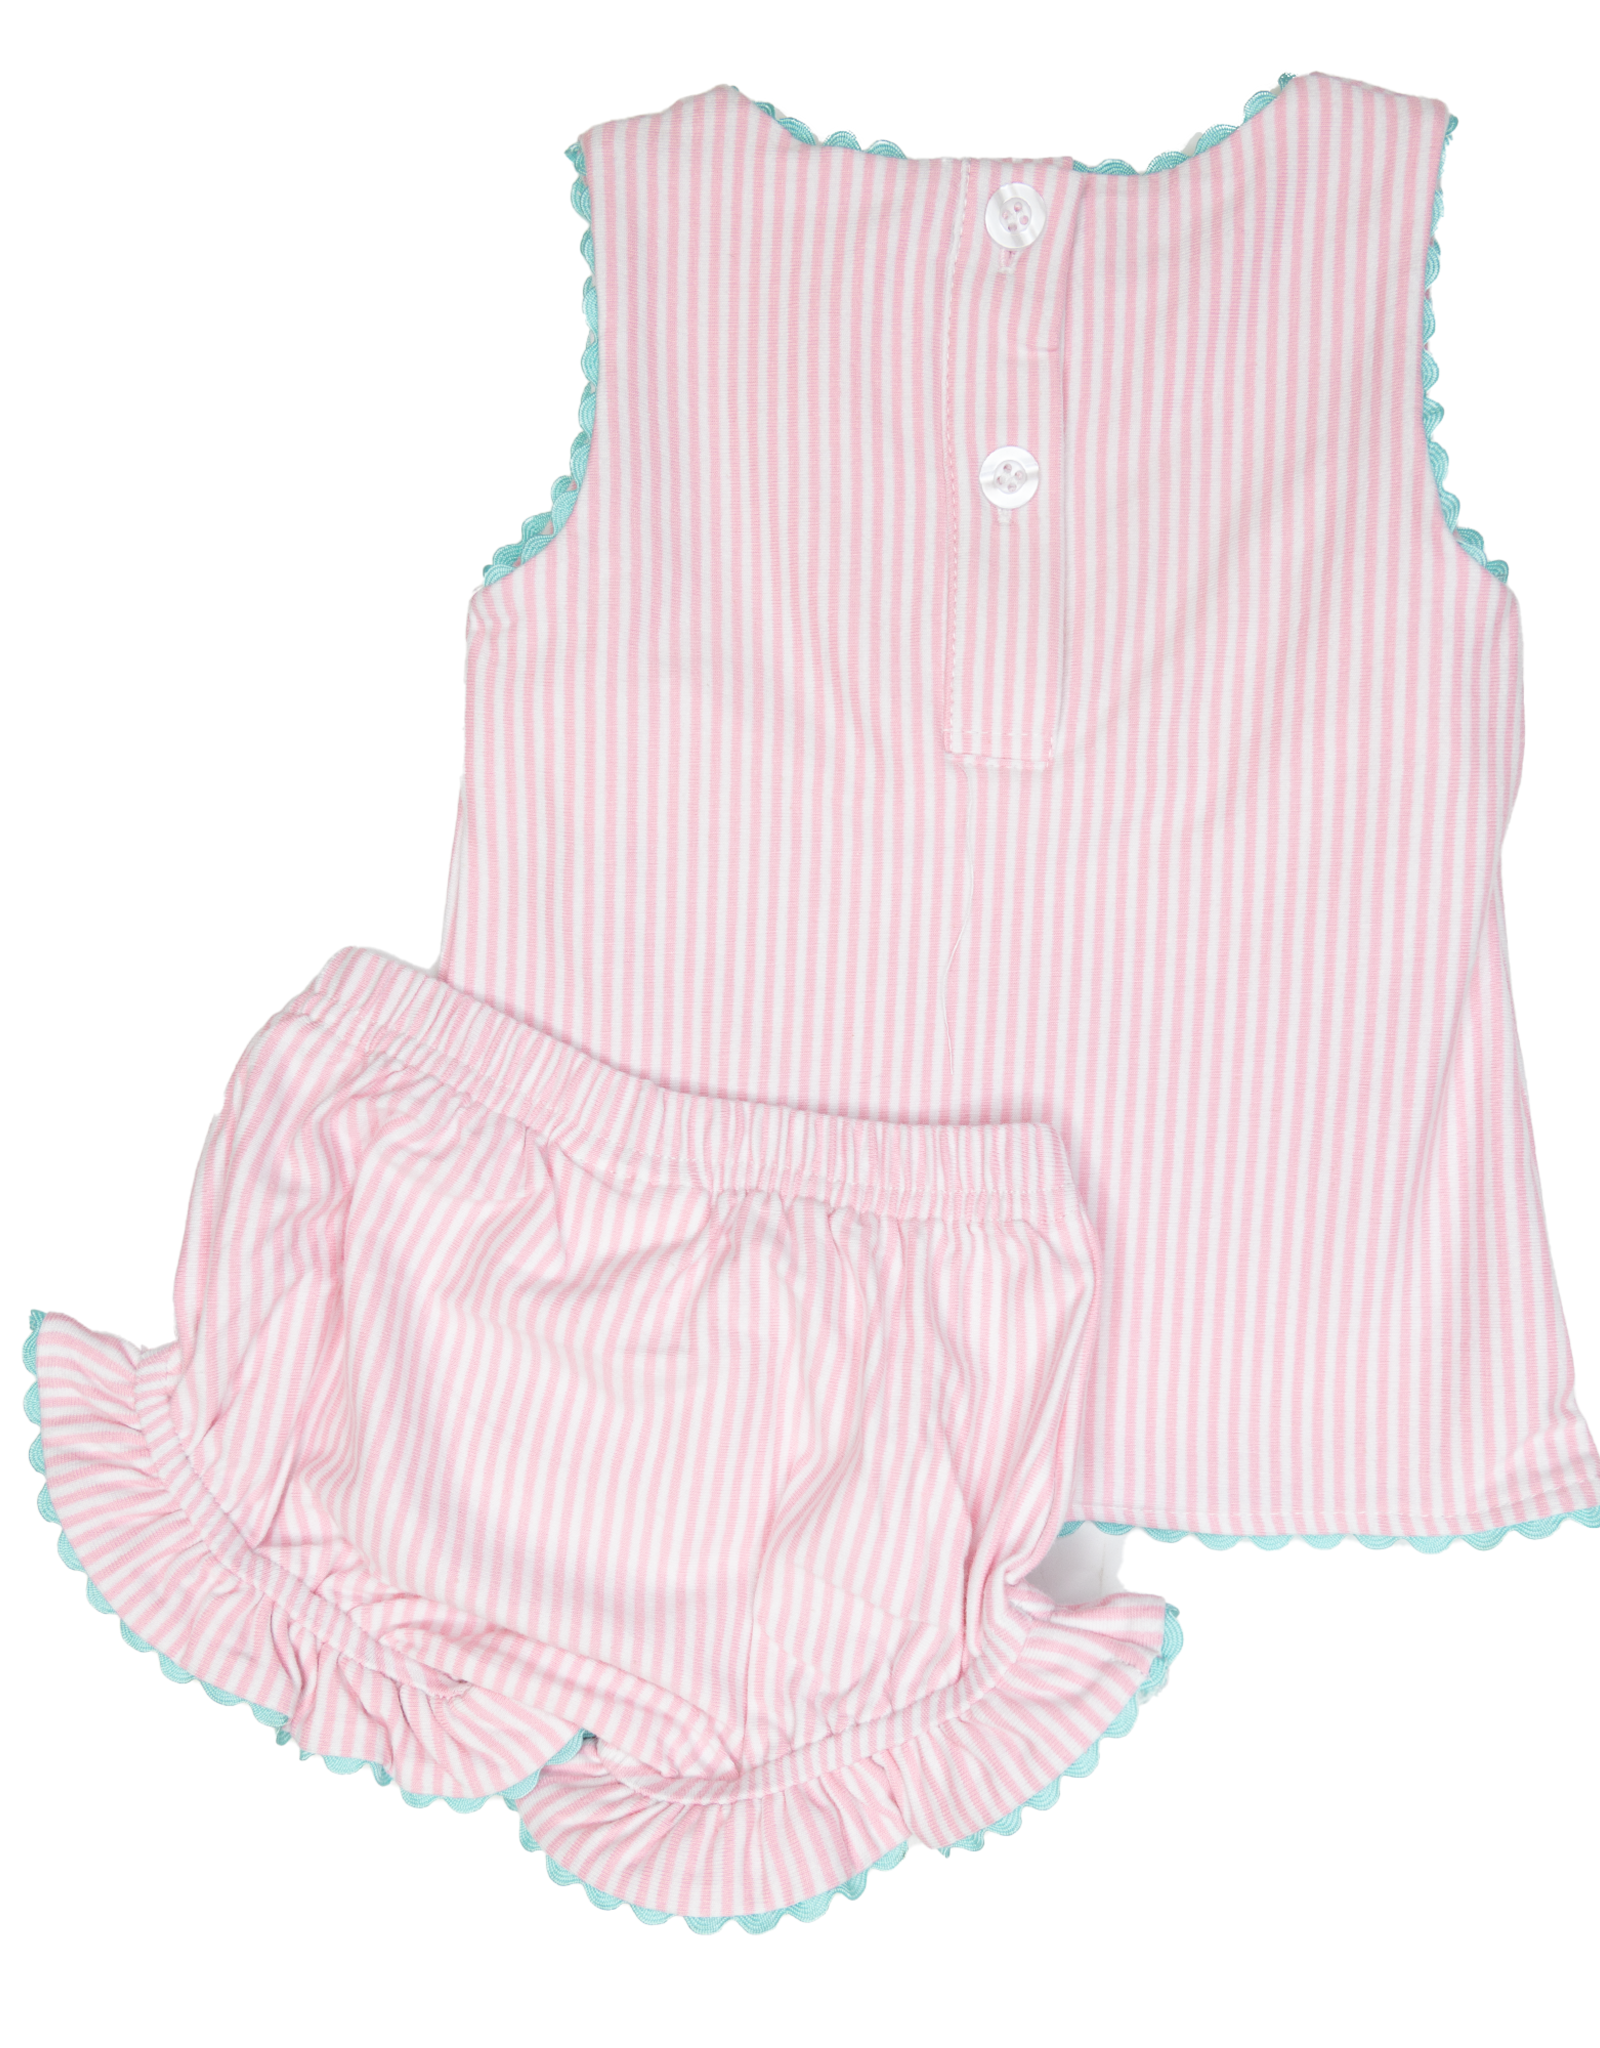 Millie Jay 612 Millie Bloomer Set Pink Stripe